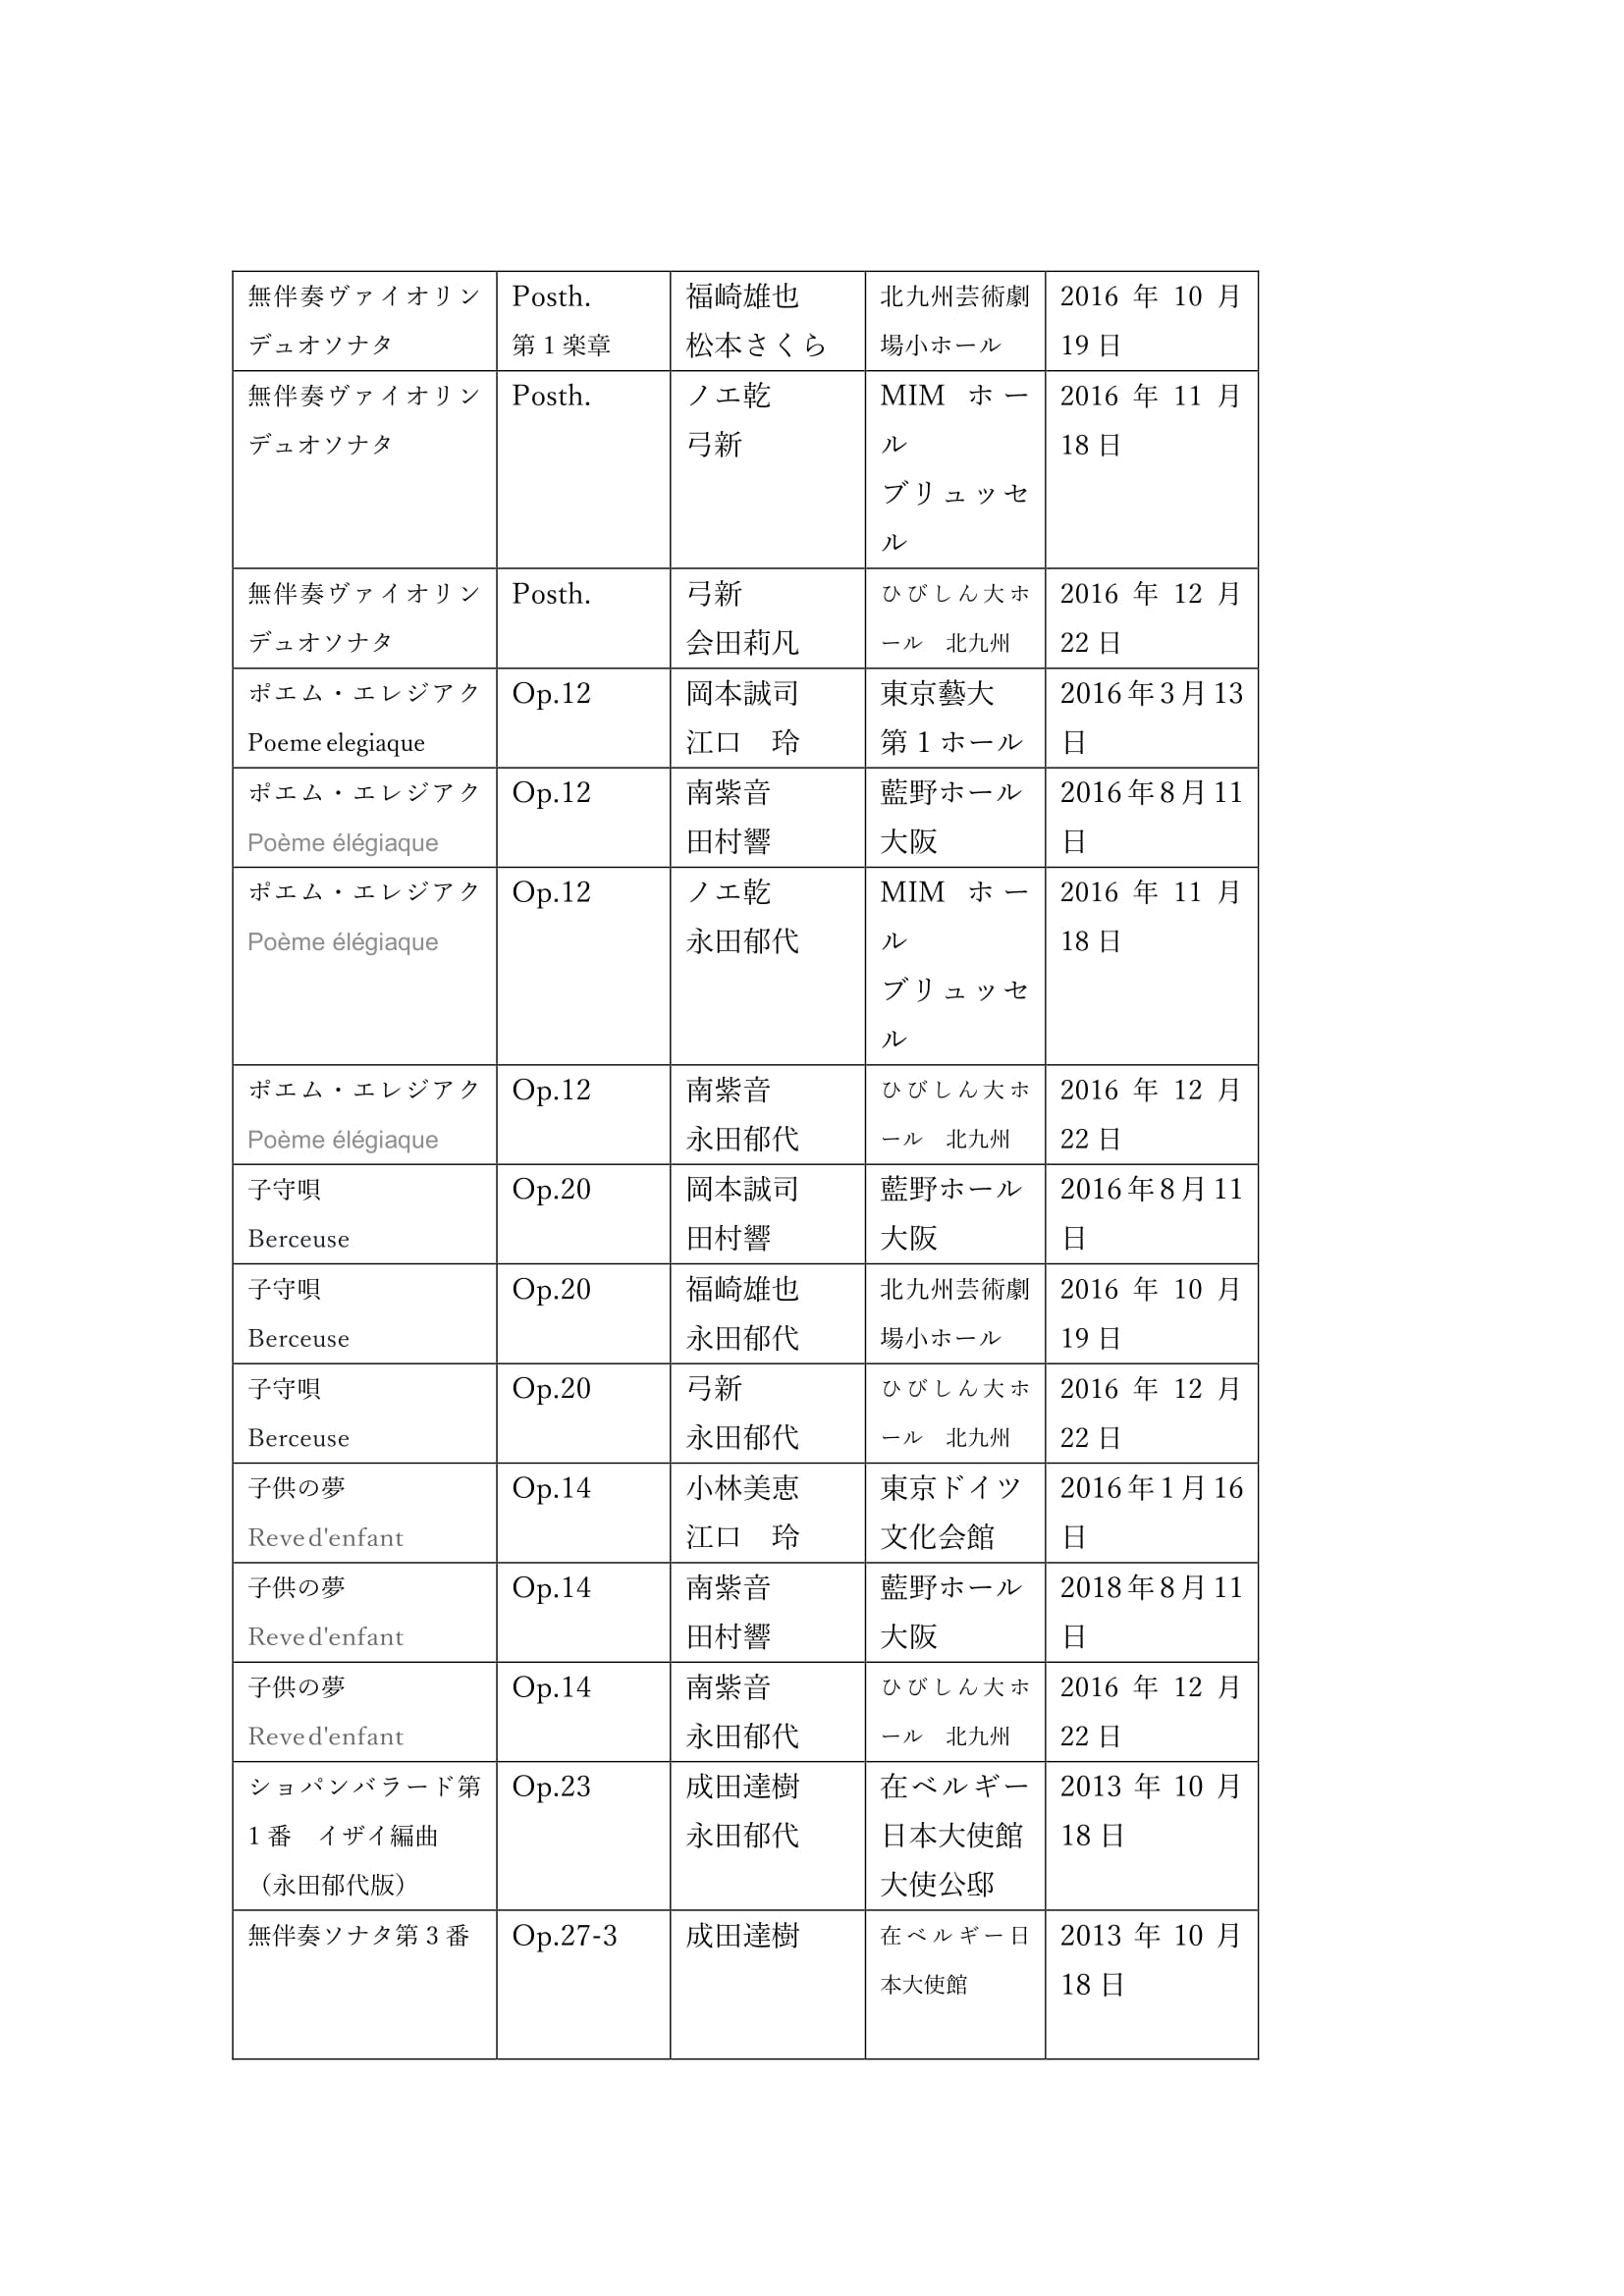 Table of Repertoire de 2016 Ysaye Society of Japan WORD-2